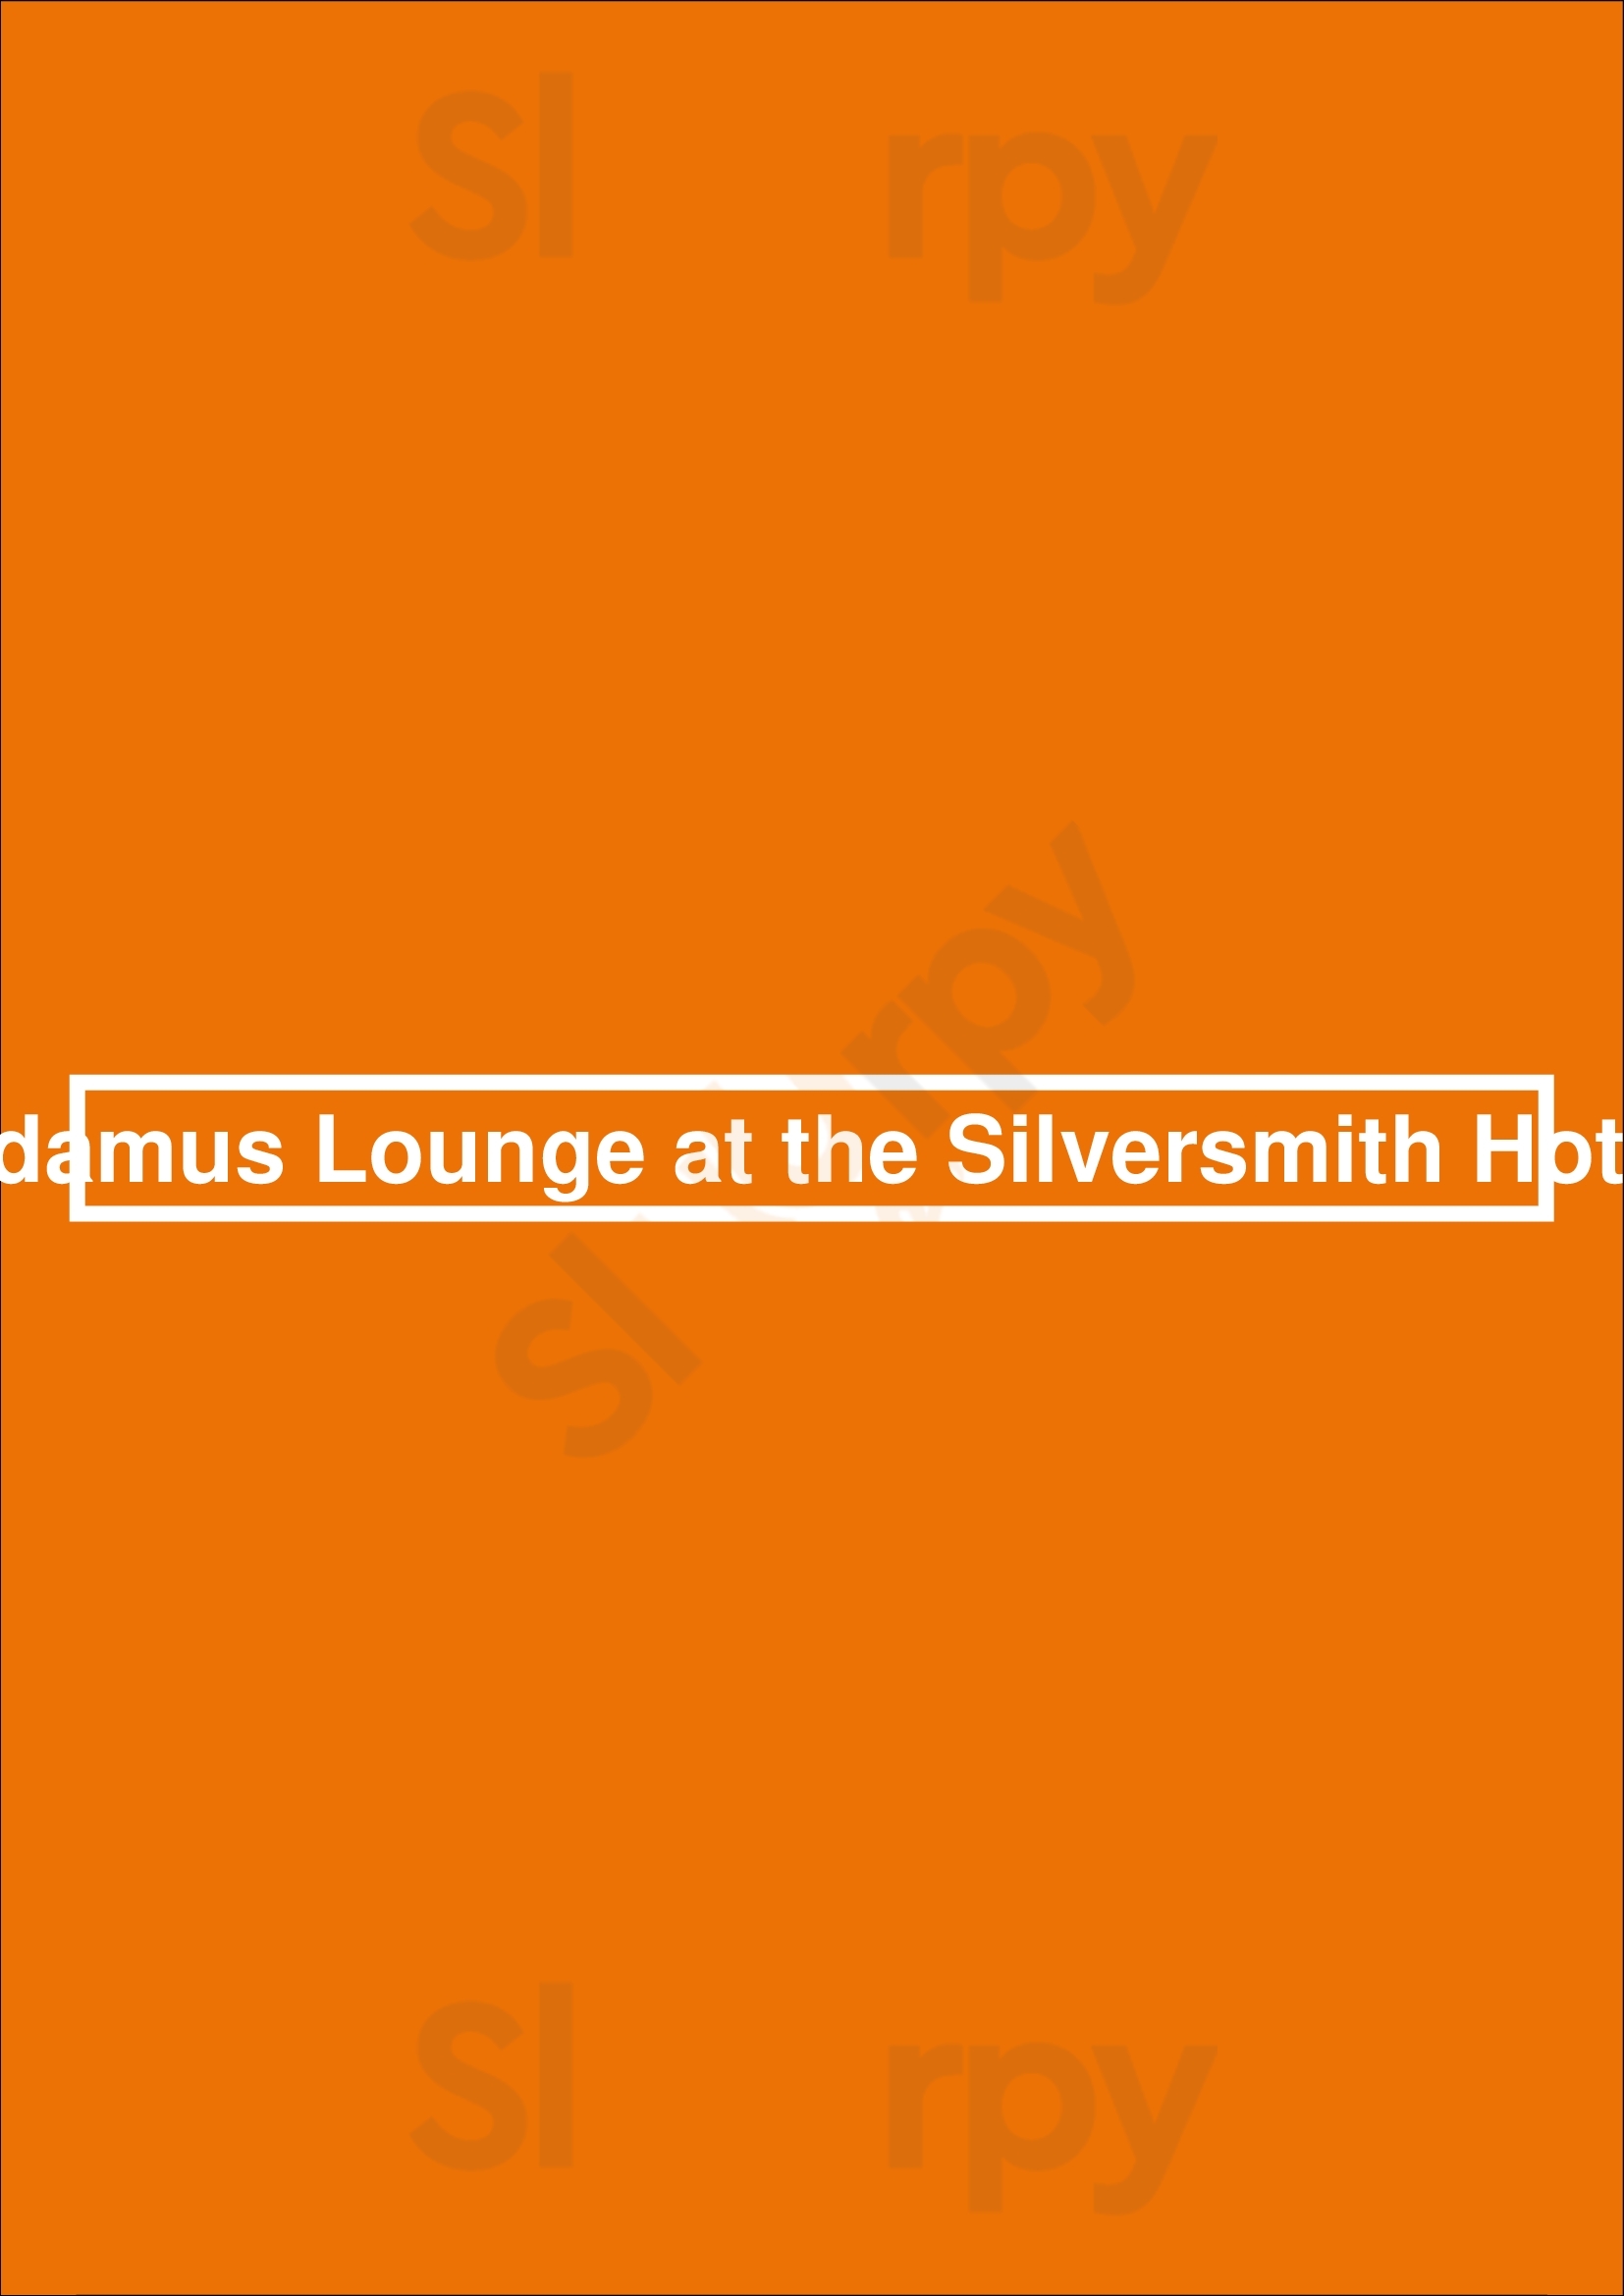 Adamus Lounge At The Silversmith Hotel Chicago Menu - 1